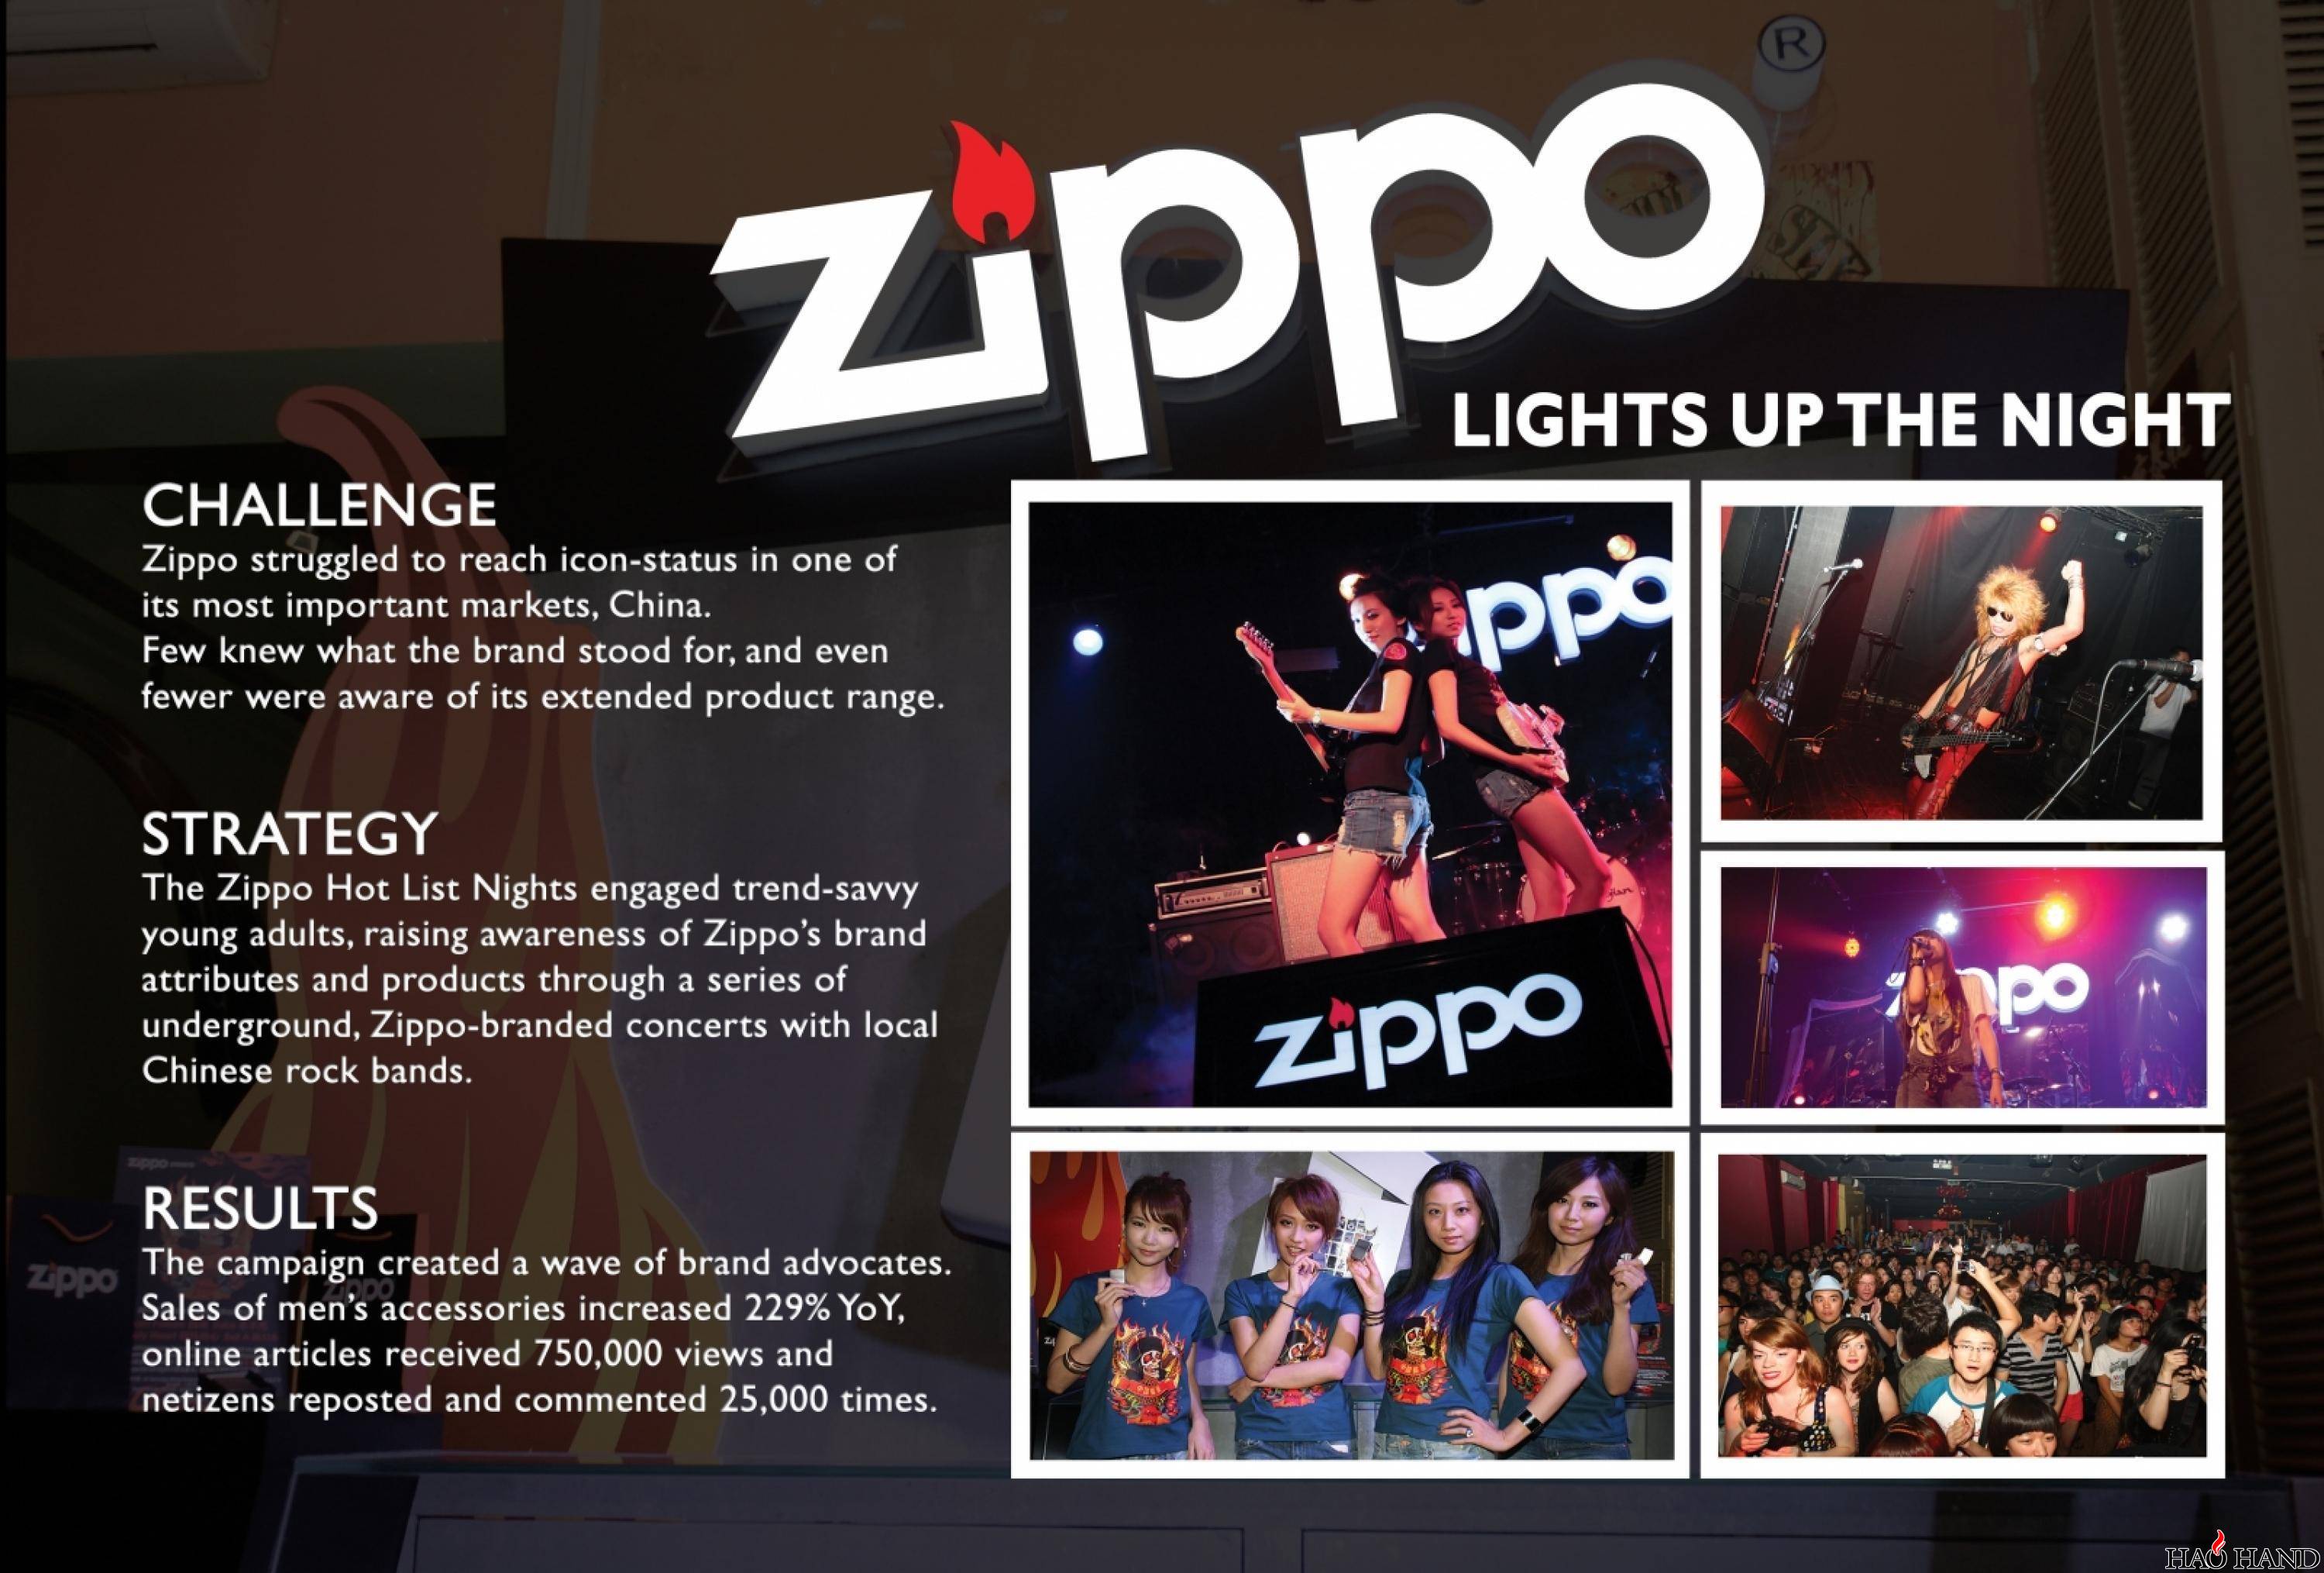 zippo-brand-image-light-up-the-night-pr-541-adeevee.jpg